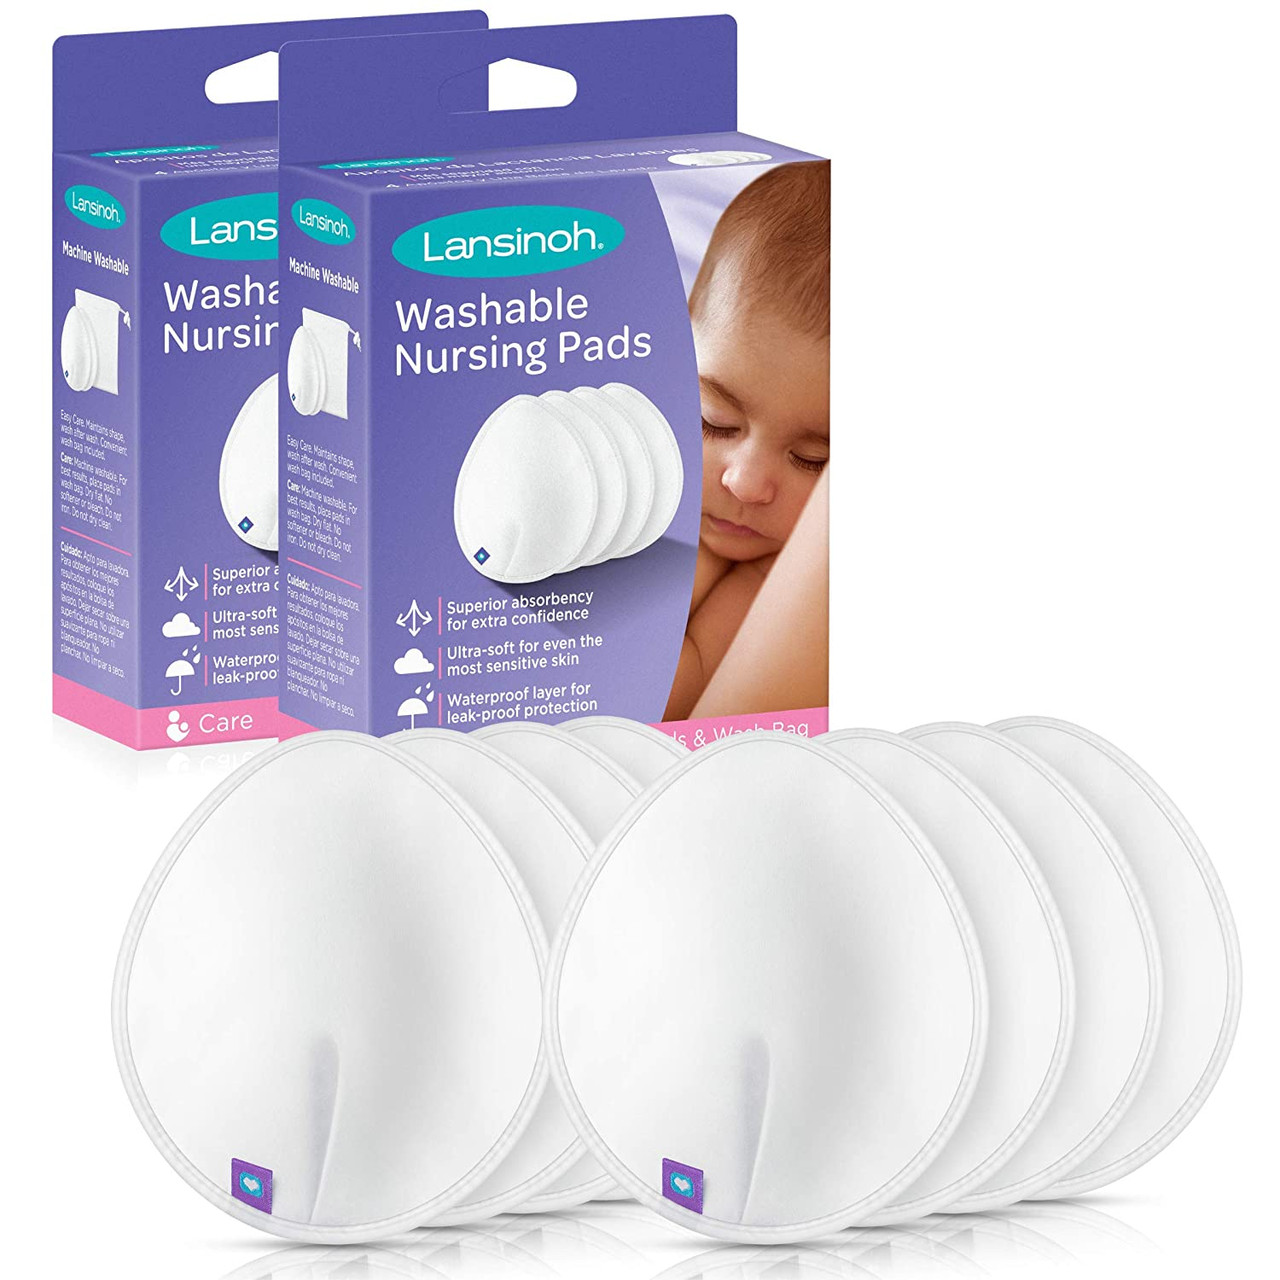 Lansinoh Reusable Nursing Pads for Breastfeeding Mothers, 8 Pads